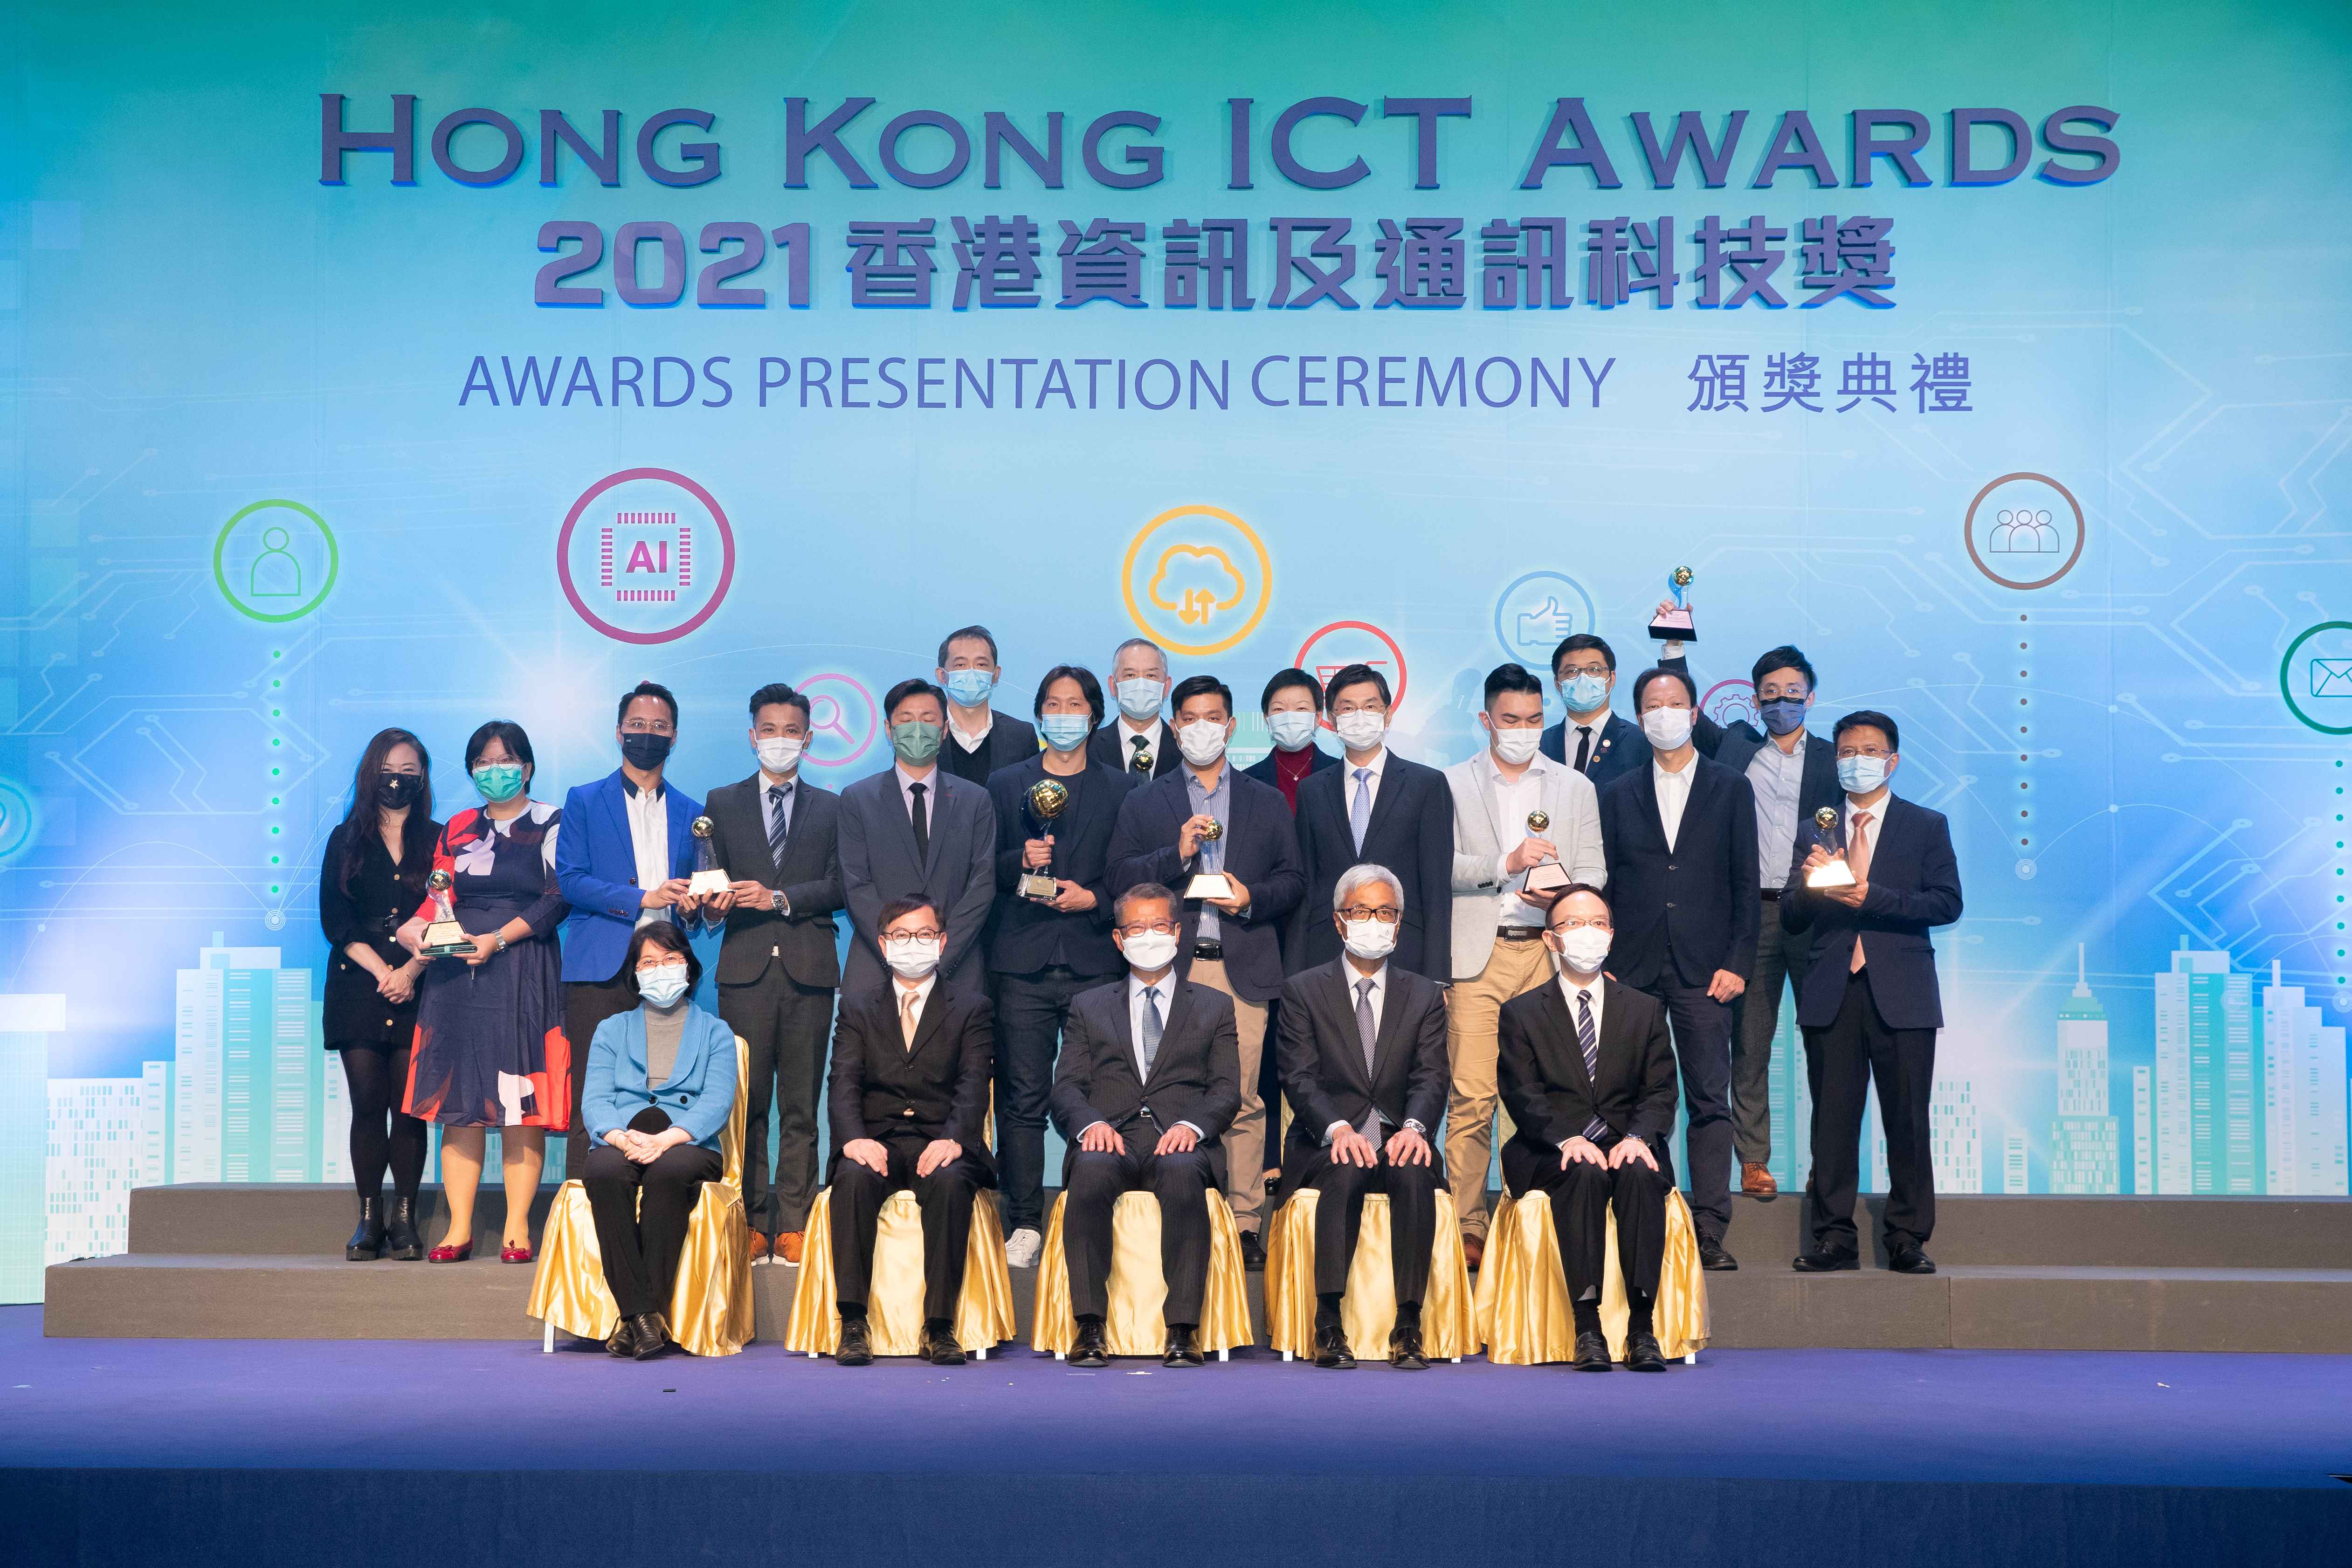 Hong Kong ICT Awards 2021 Smart People Award Winners Group Photo